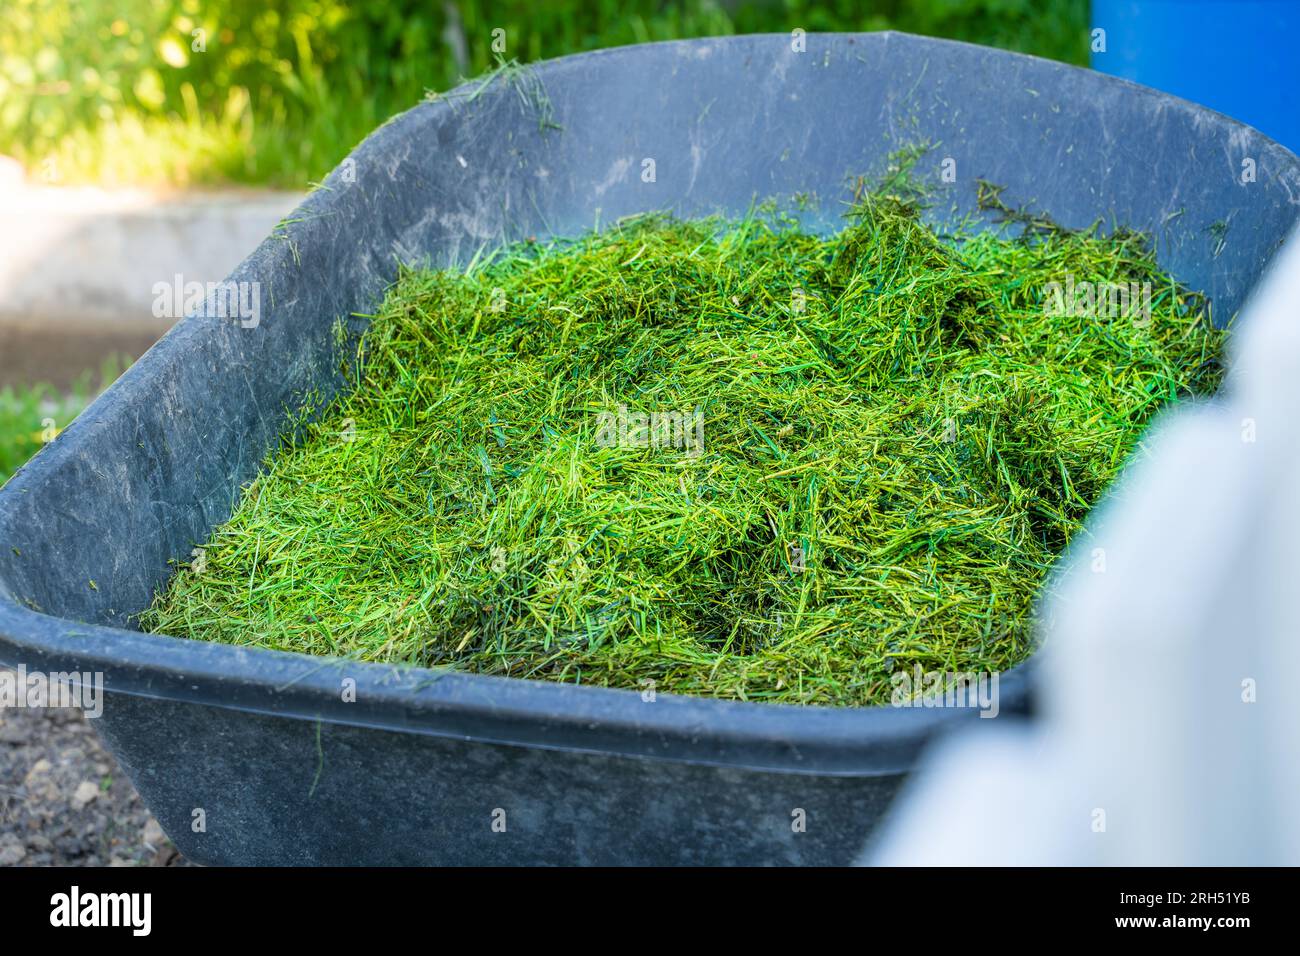 Plastic garden wheelbarrow filled with freshly cut green grass, close-up Stock Photo